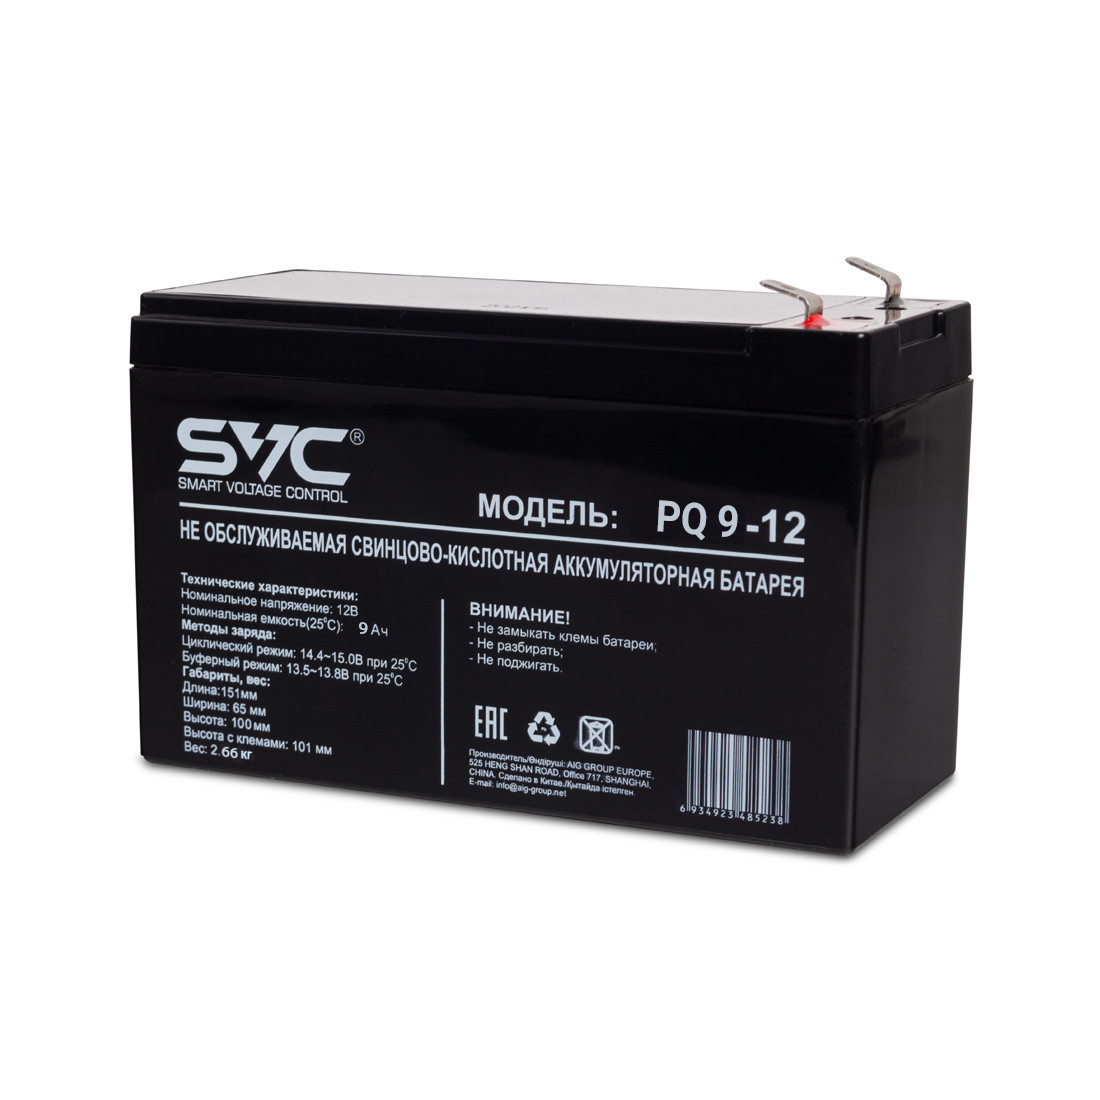 Батарея  SVC  PQ9-12  Свинцово-кислотная 12В 9 Ач  Вес: 2.66 кг  Размер в мм.: 151*65*100